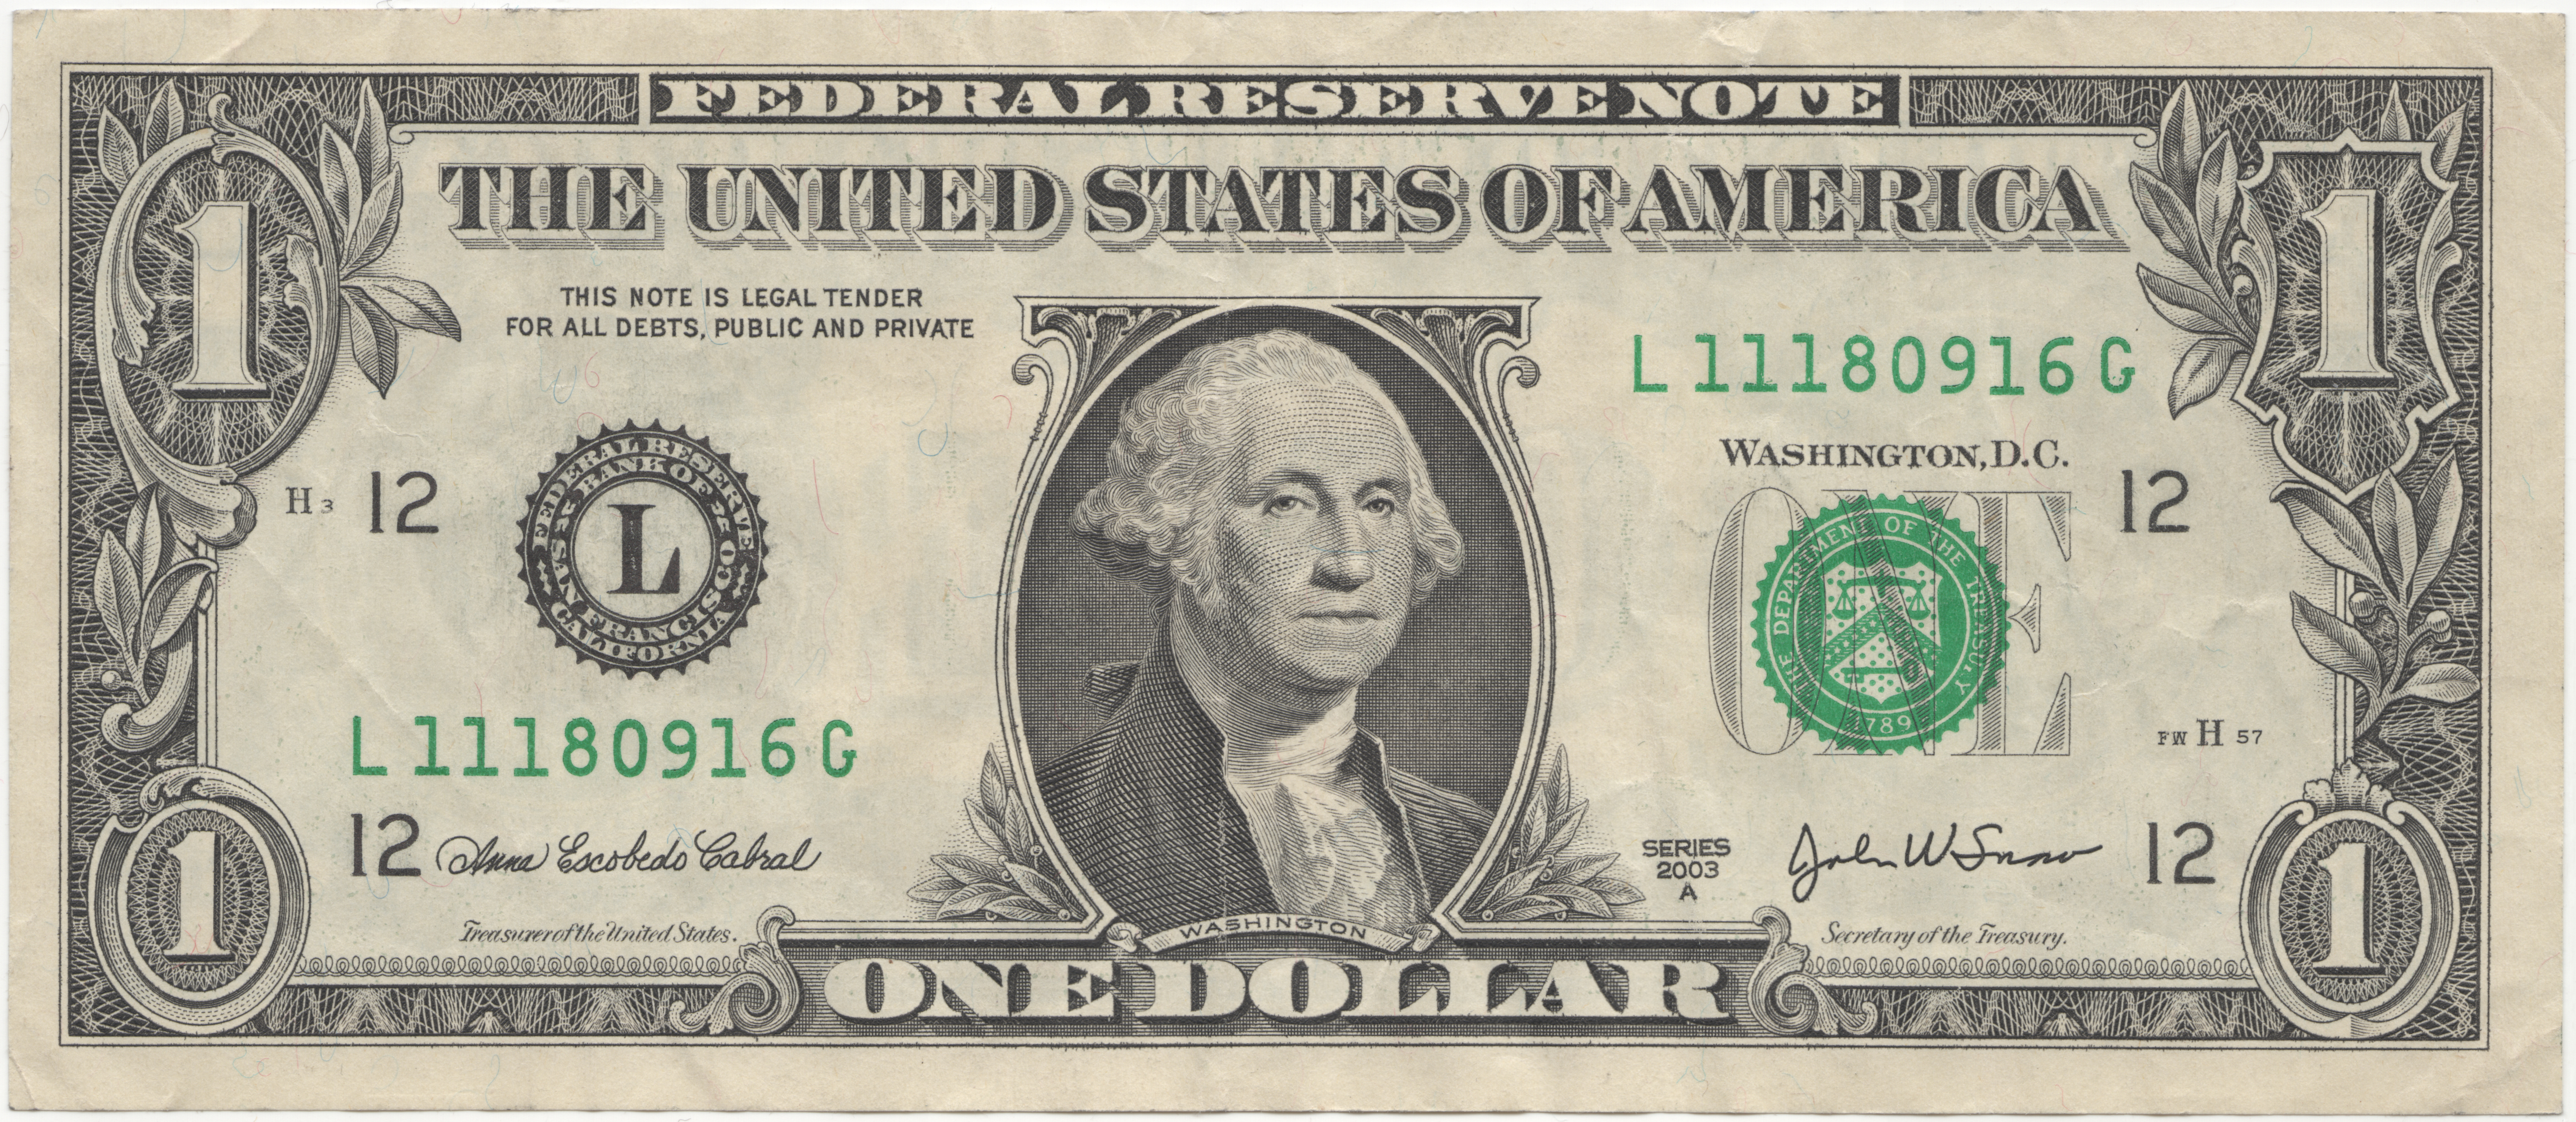 The George Washington Dollar